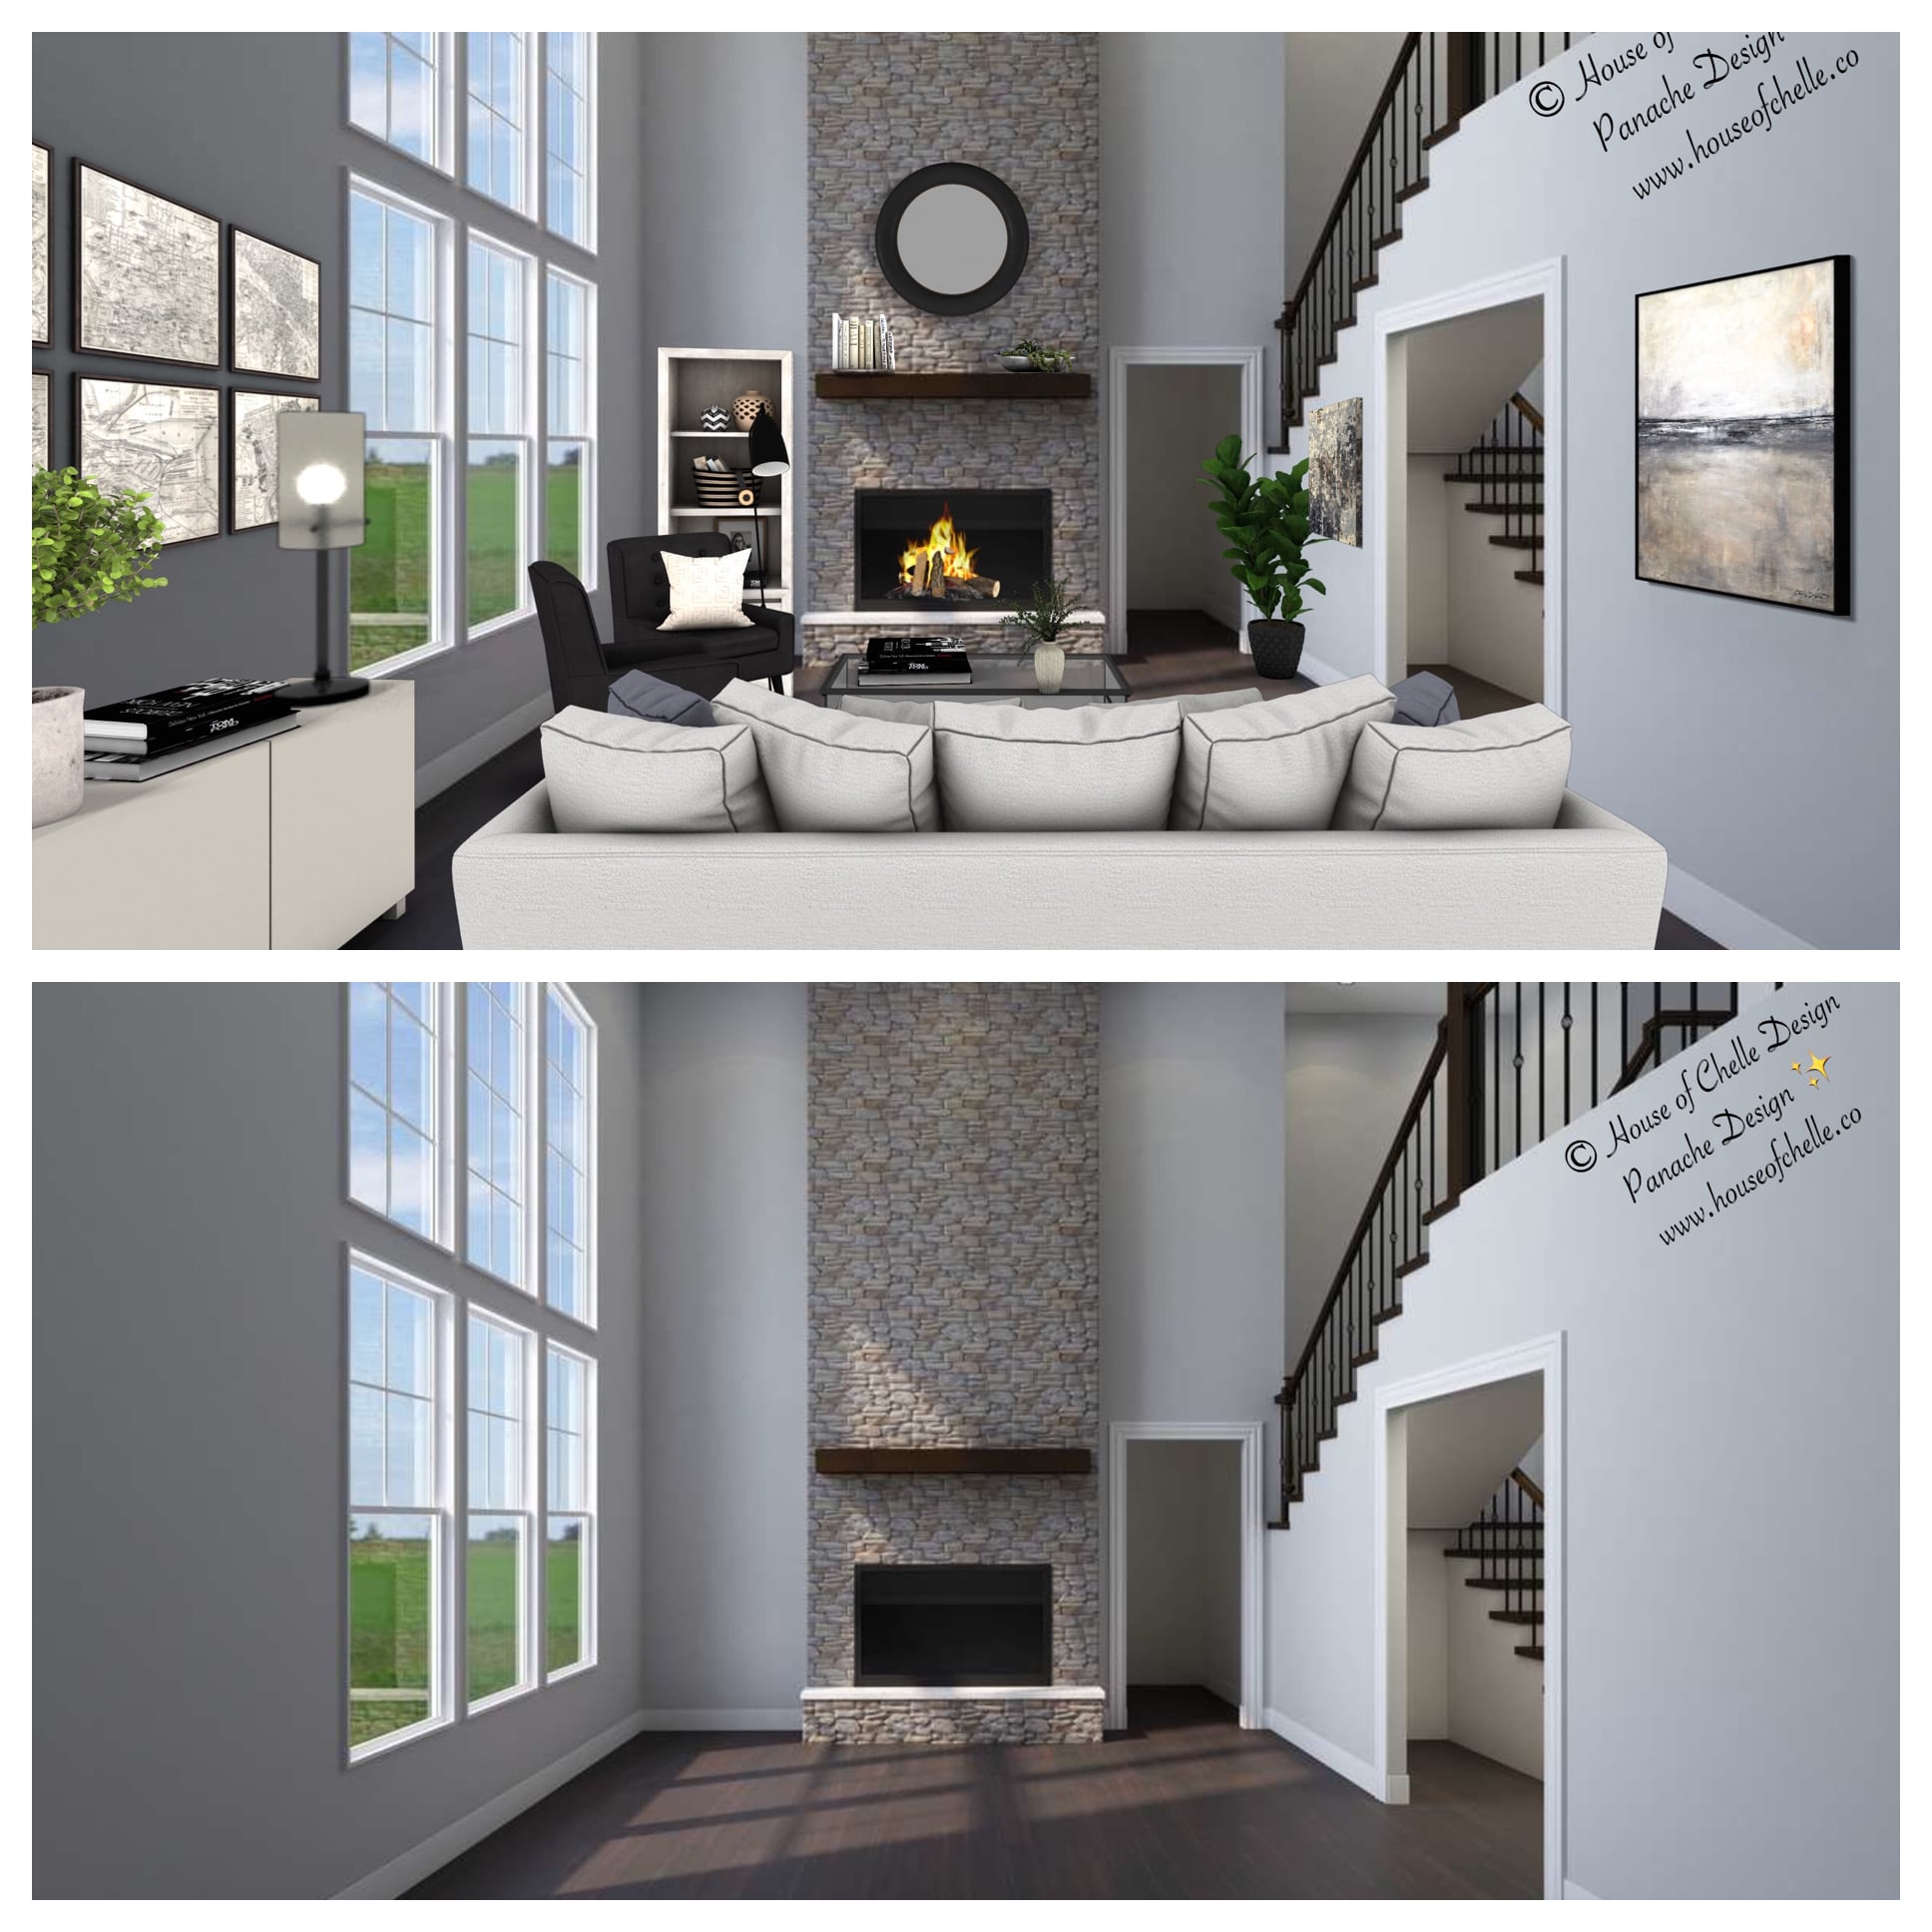 HOME Panache Design Affordable Interior Design in Washington DC